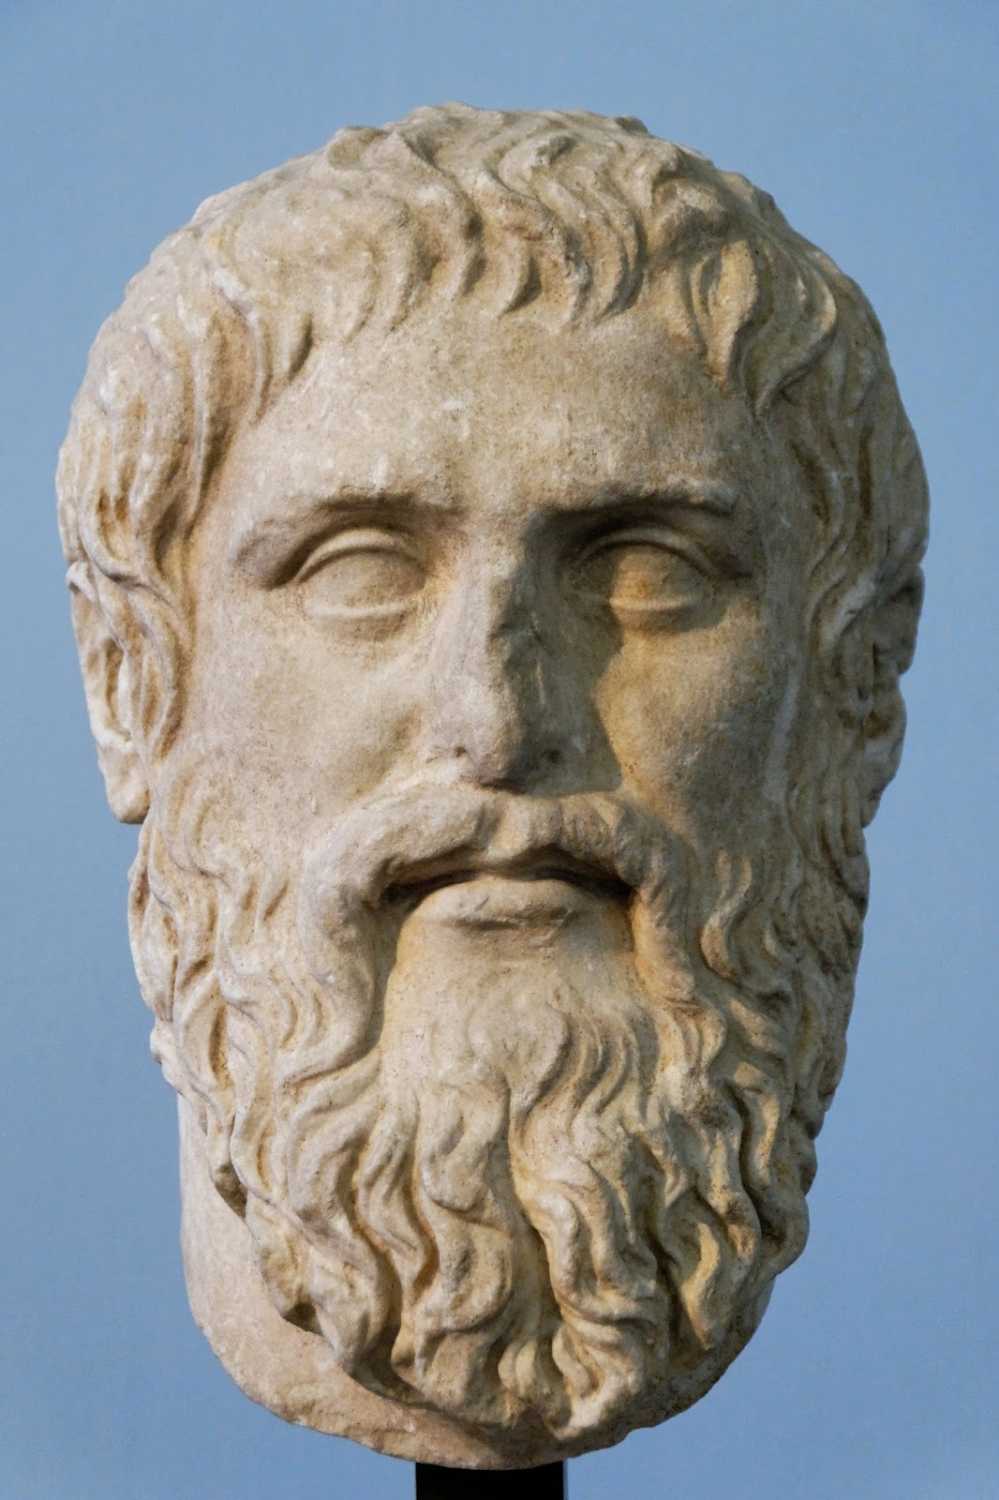 Plato, Ancient Greece Philosopher